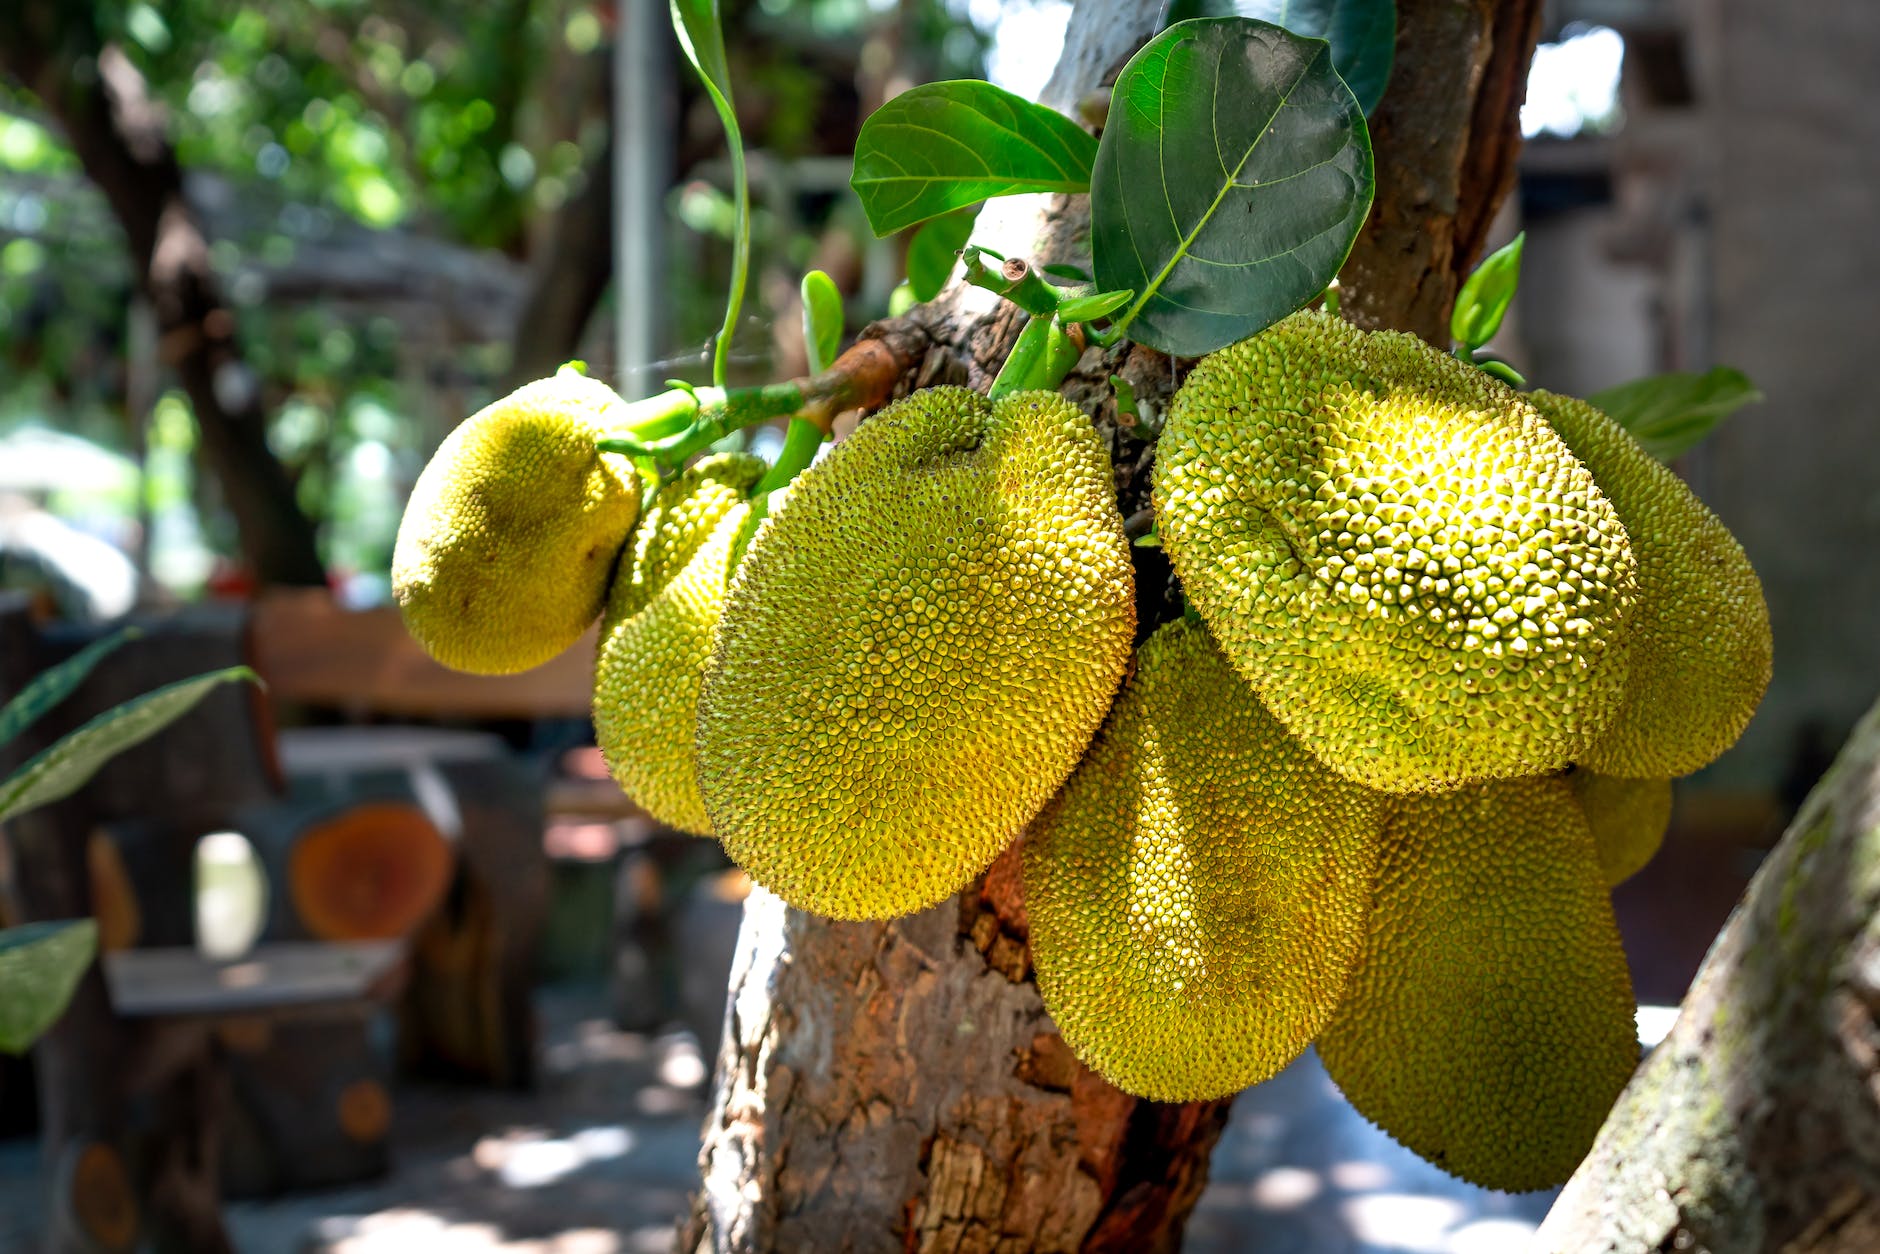 jackfruit hanging on a tree trunk